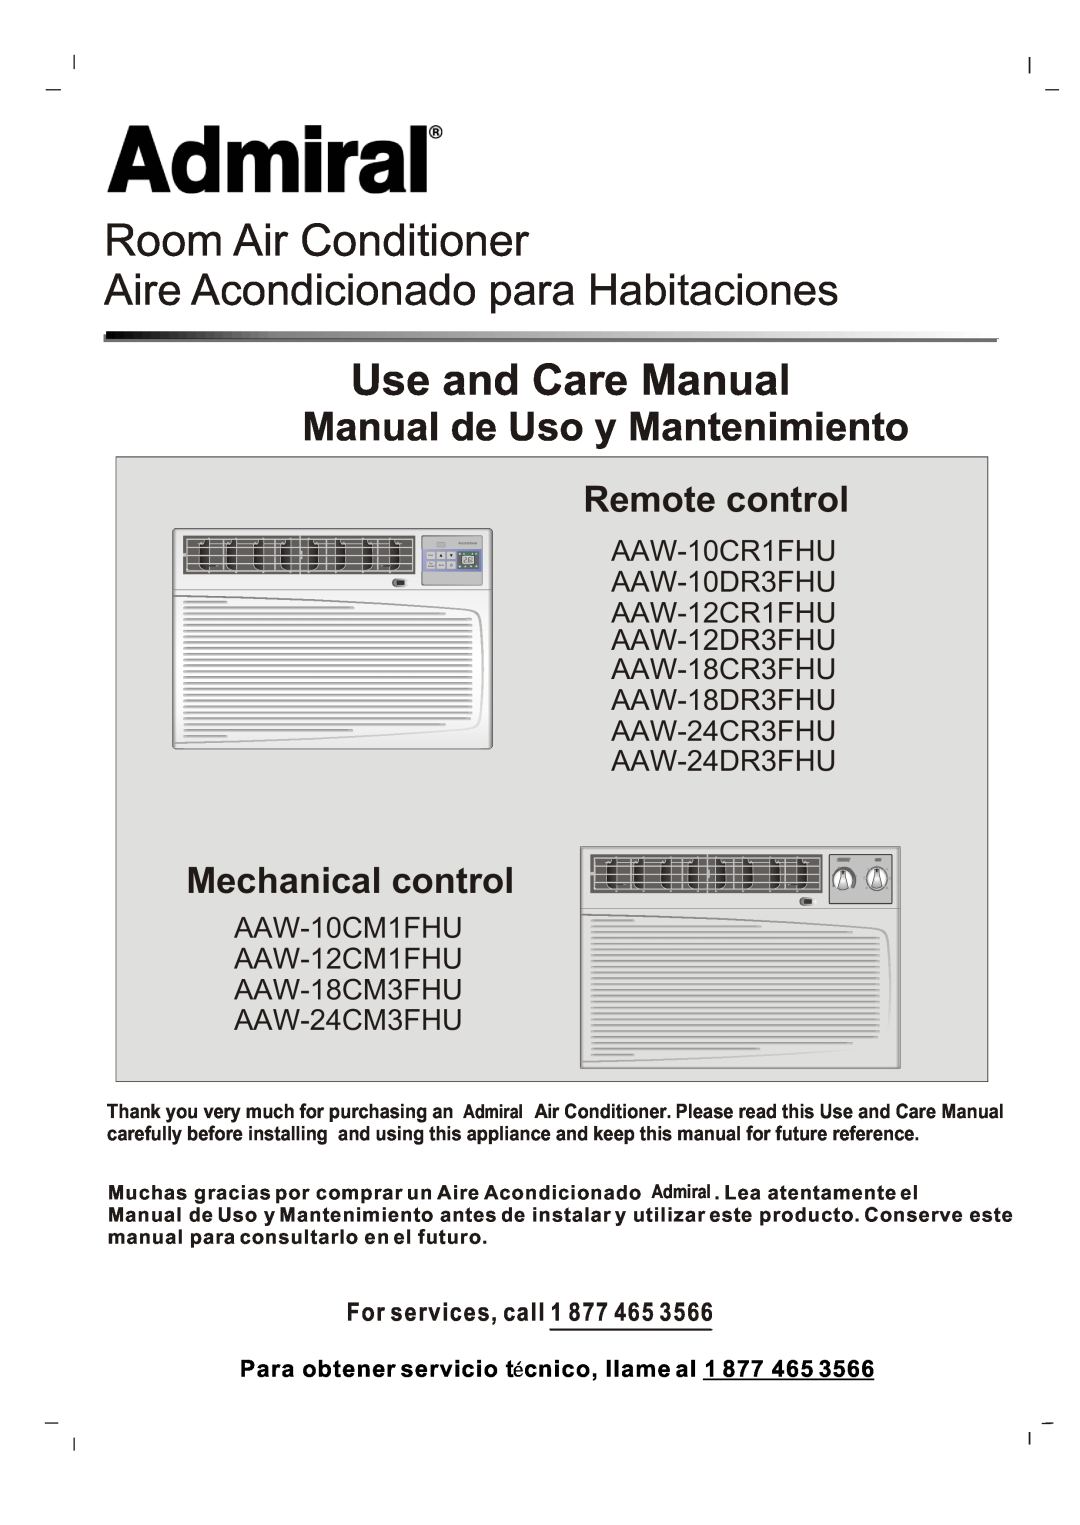 Admiral AAW-24CR3FHU manual Para obtener servicio tcnico, llame al, Room Air Conditioner, Use and Care Manual 